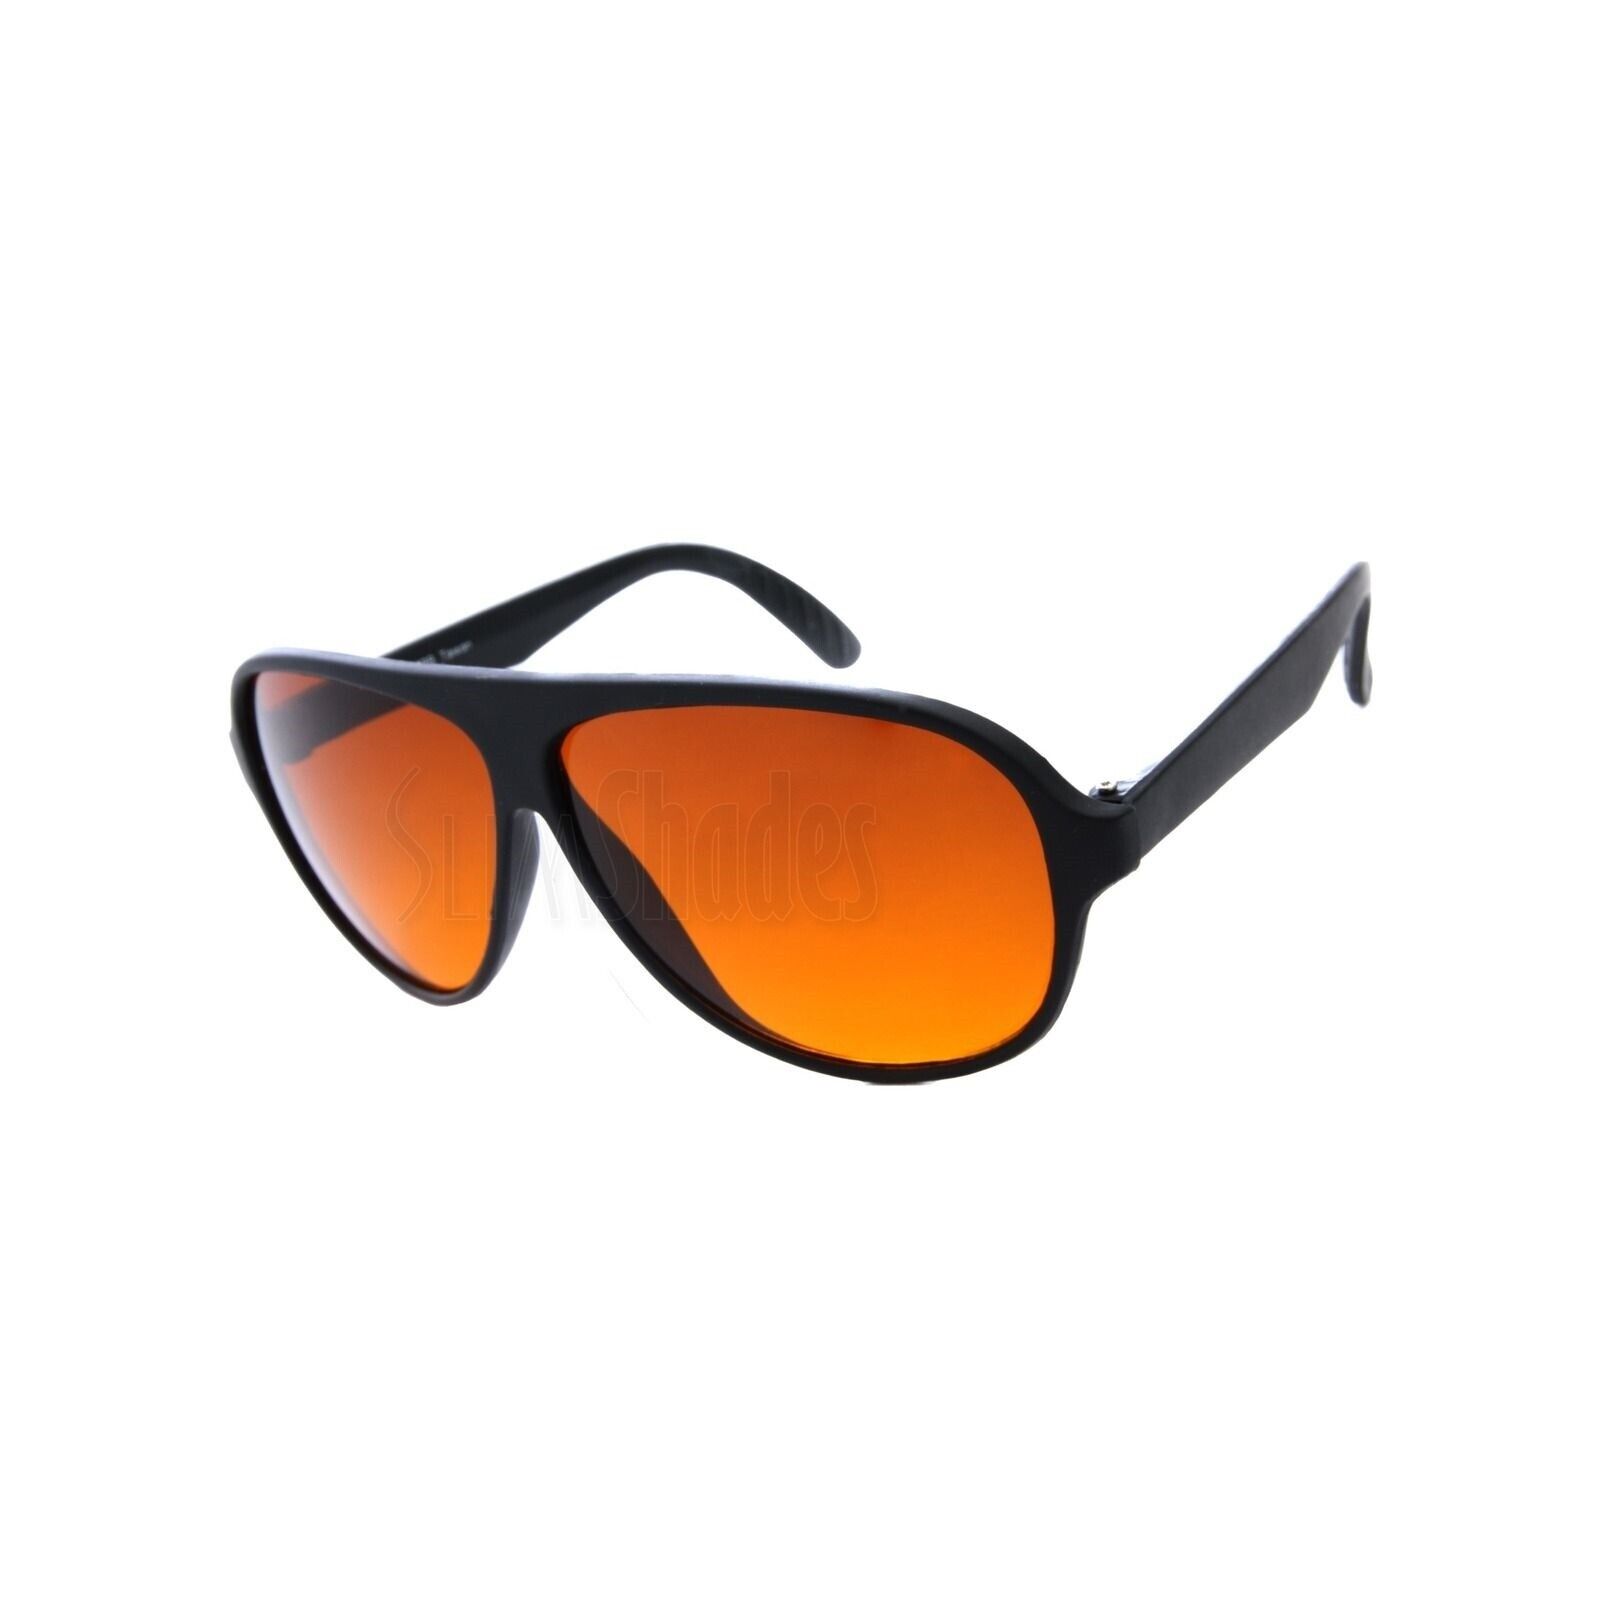 3 PAIR Aviator Blue Blocking Sunglasses with Blue Light Blocker Amber Lens Unbranded 3012-3pk - фотография #2